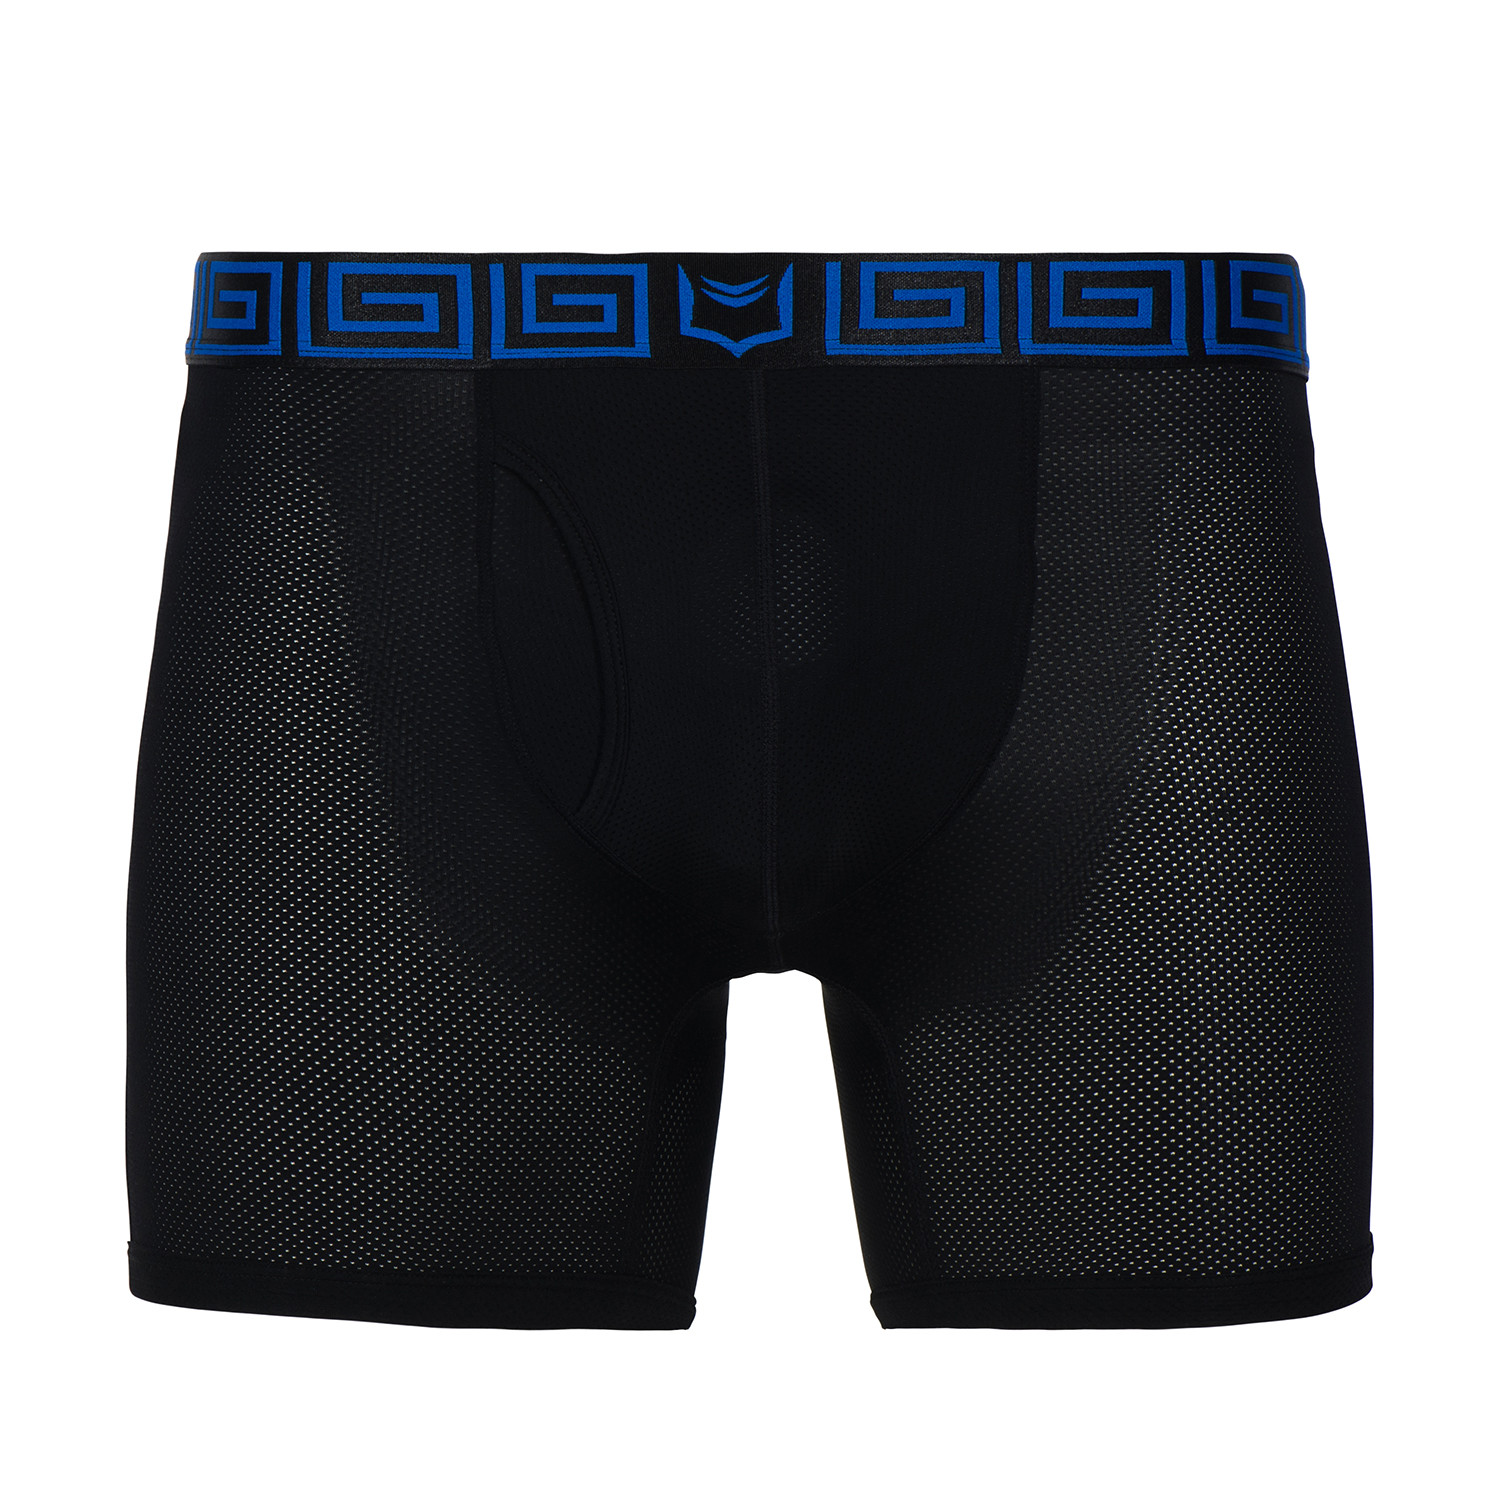 Sheath AirFlow Mesh // Black (Large) - Sheath Underwear - Touch of Modern